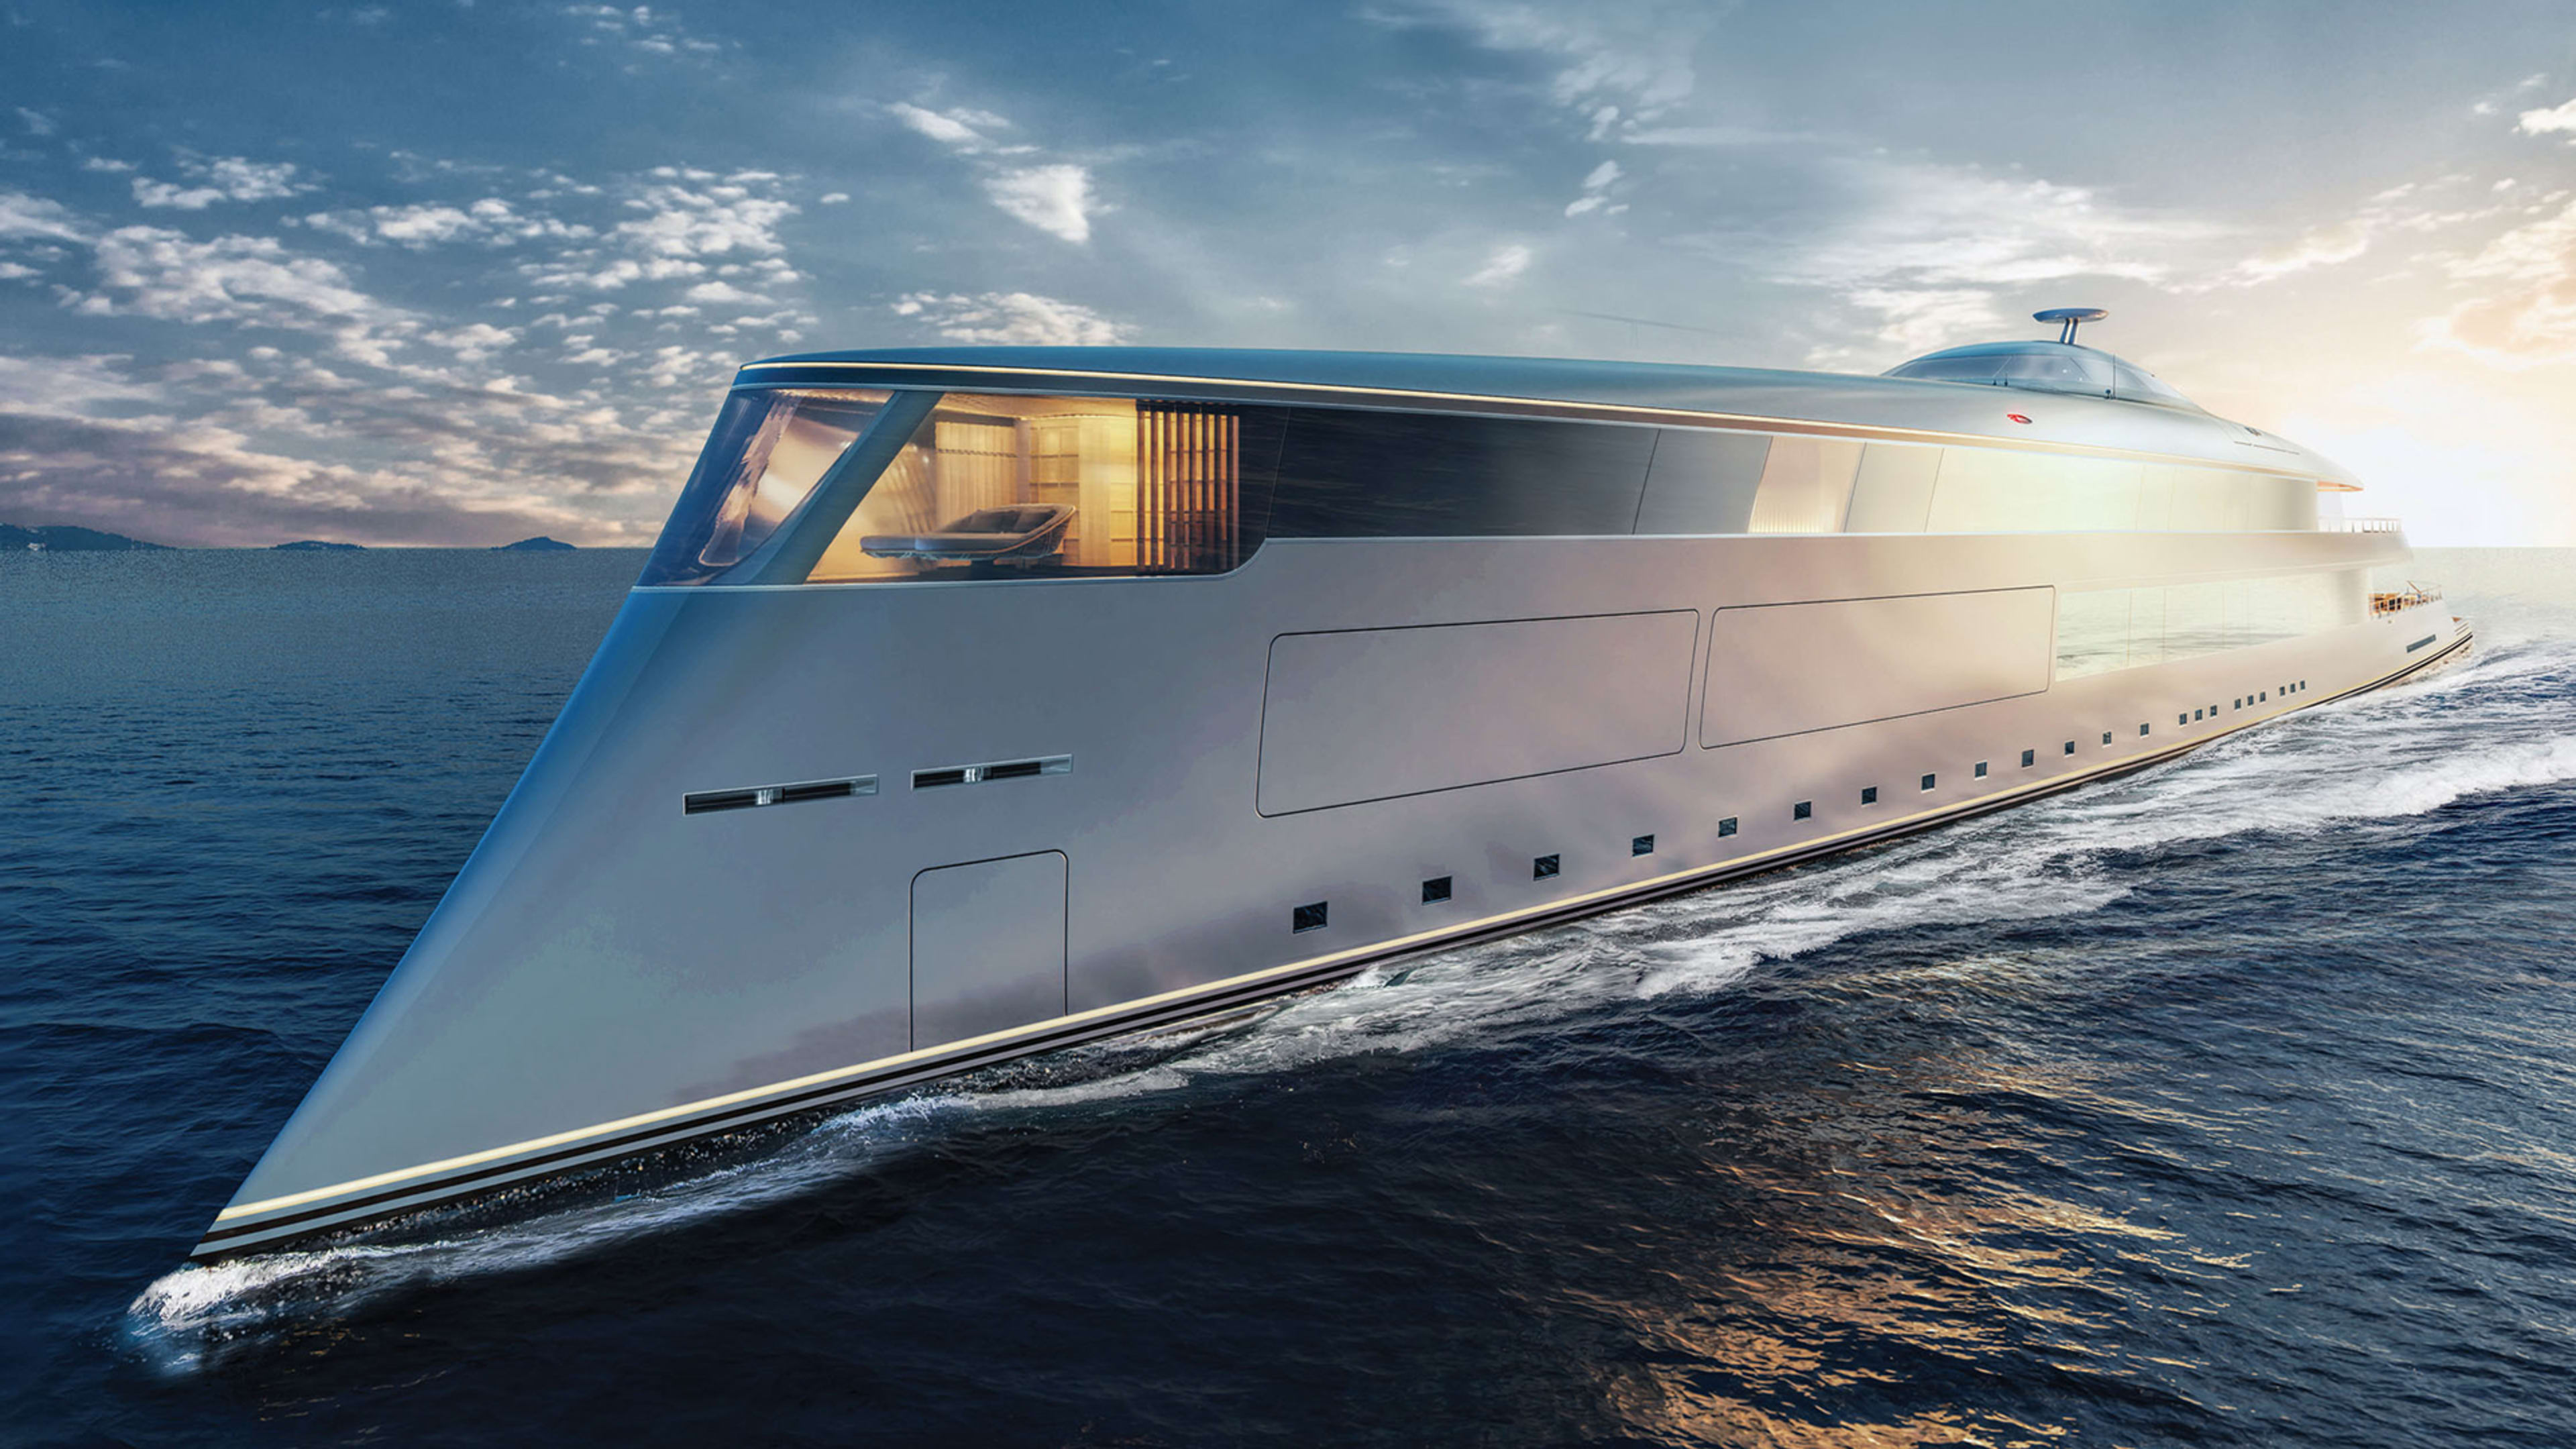 Update: Yacht-maker Sinot denies reports that Bill Gates bought an eco-friendly ‘superyacht’